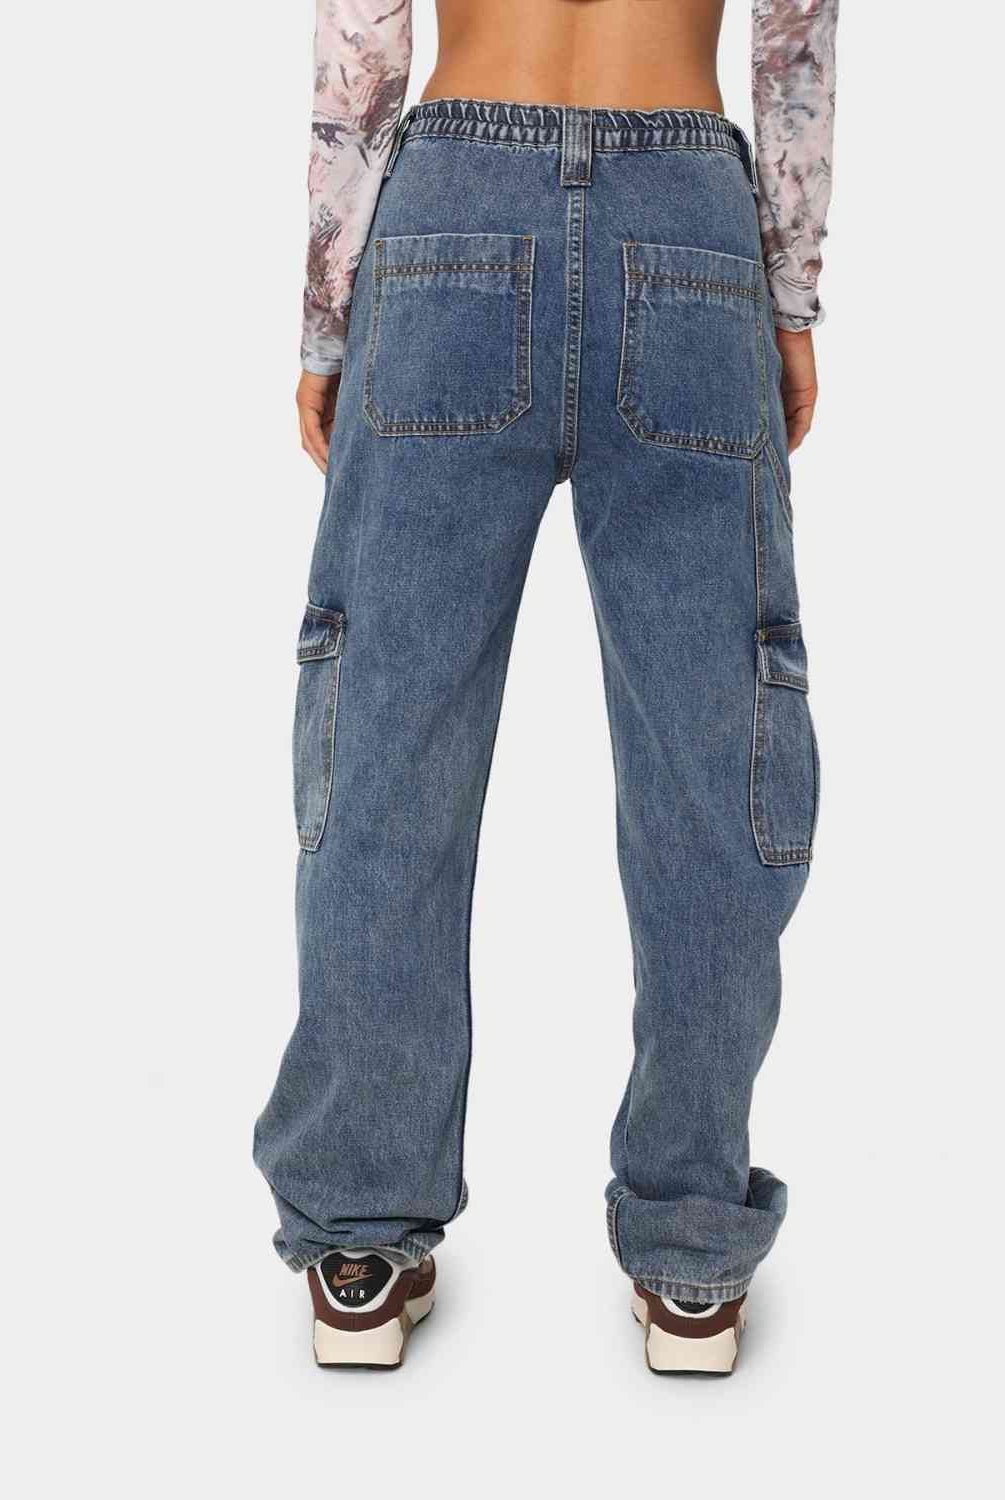 Dim Gray Straight Jeans with Pockets Denim